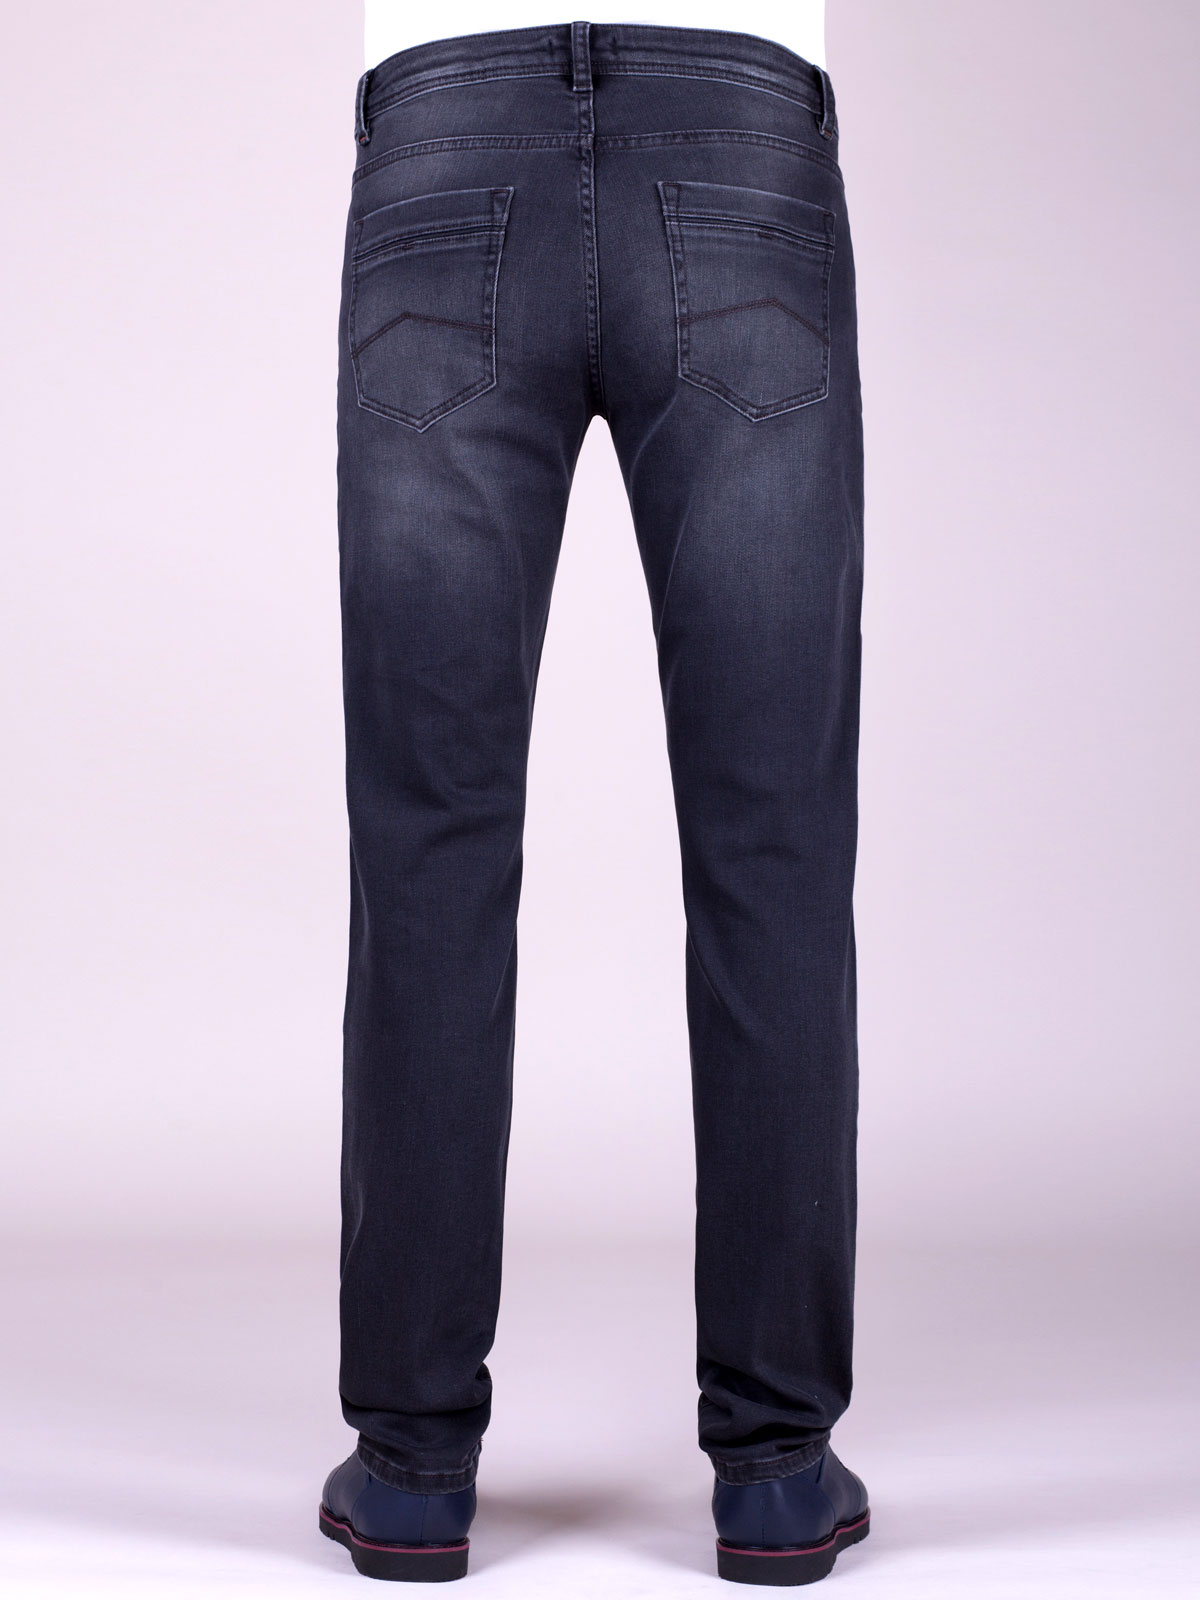 Graphite gray jeans - 62116 € 27.56 img3